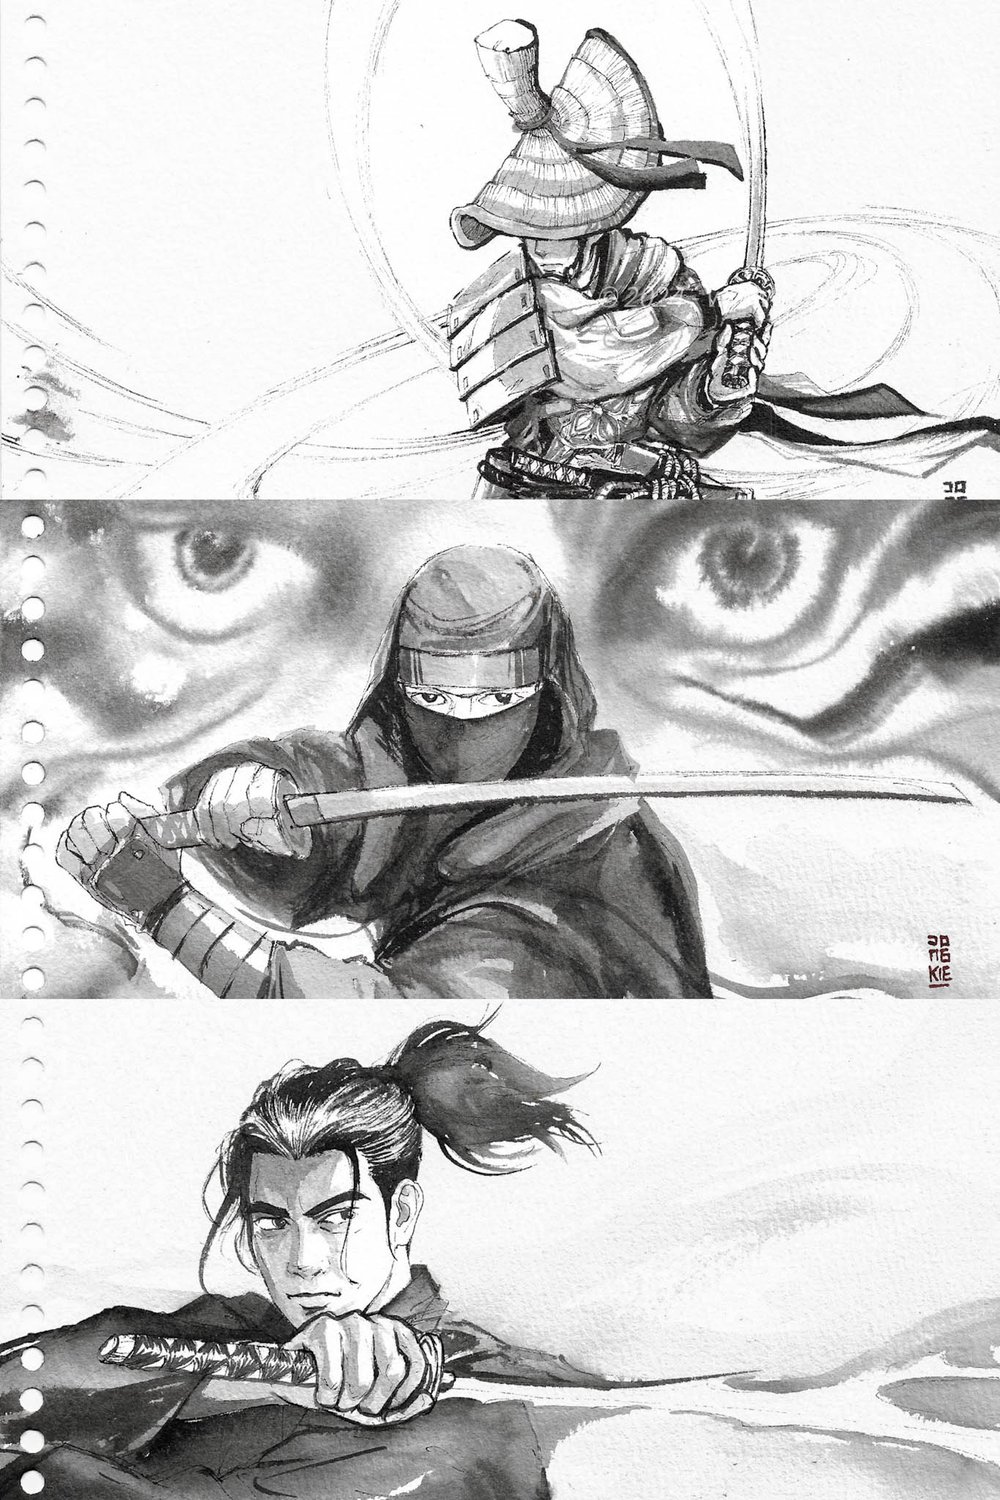 Samurai Sketchbook No. 4